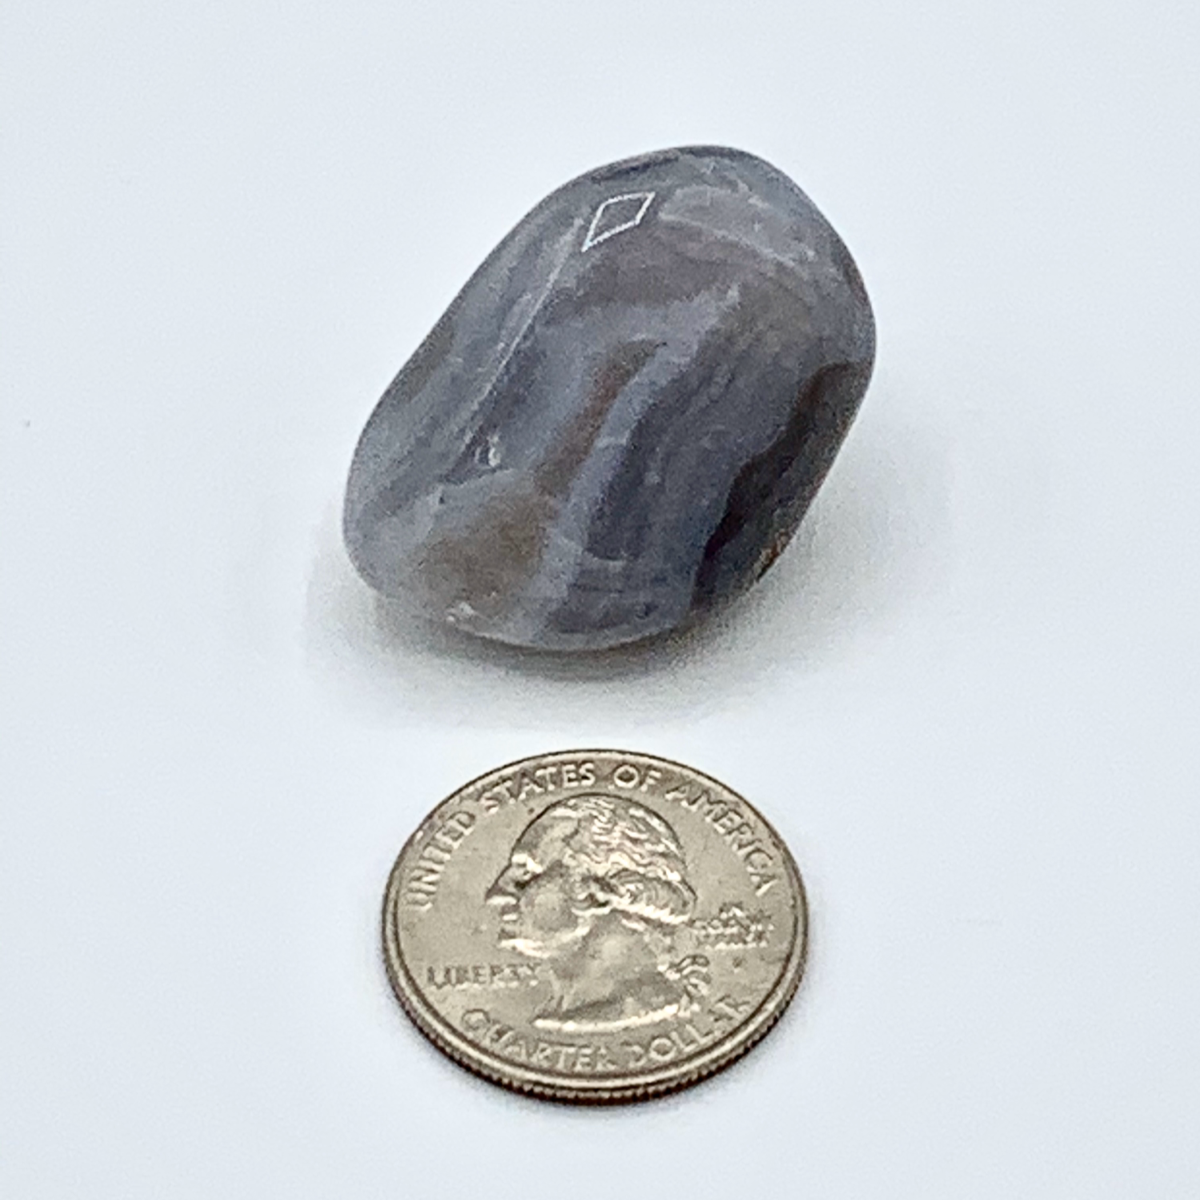 Chalcedony tumbled stone